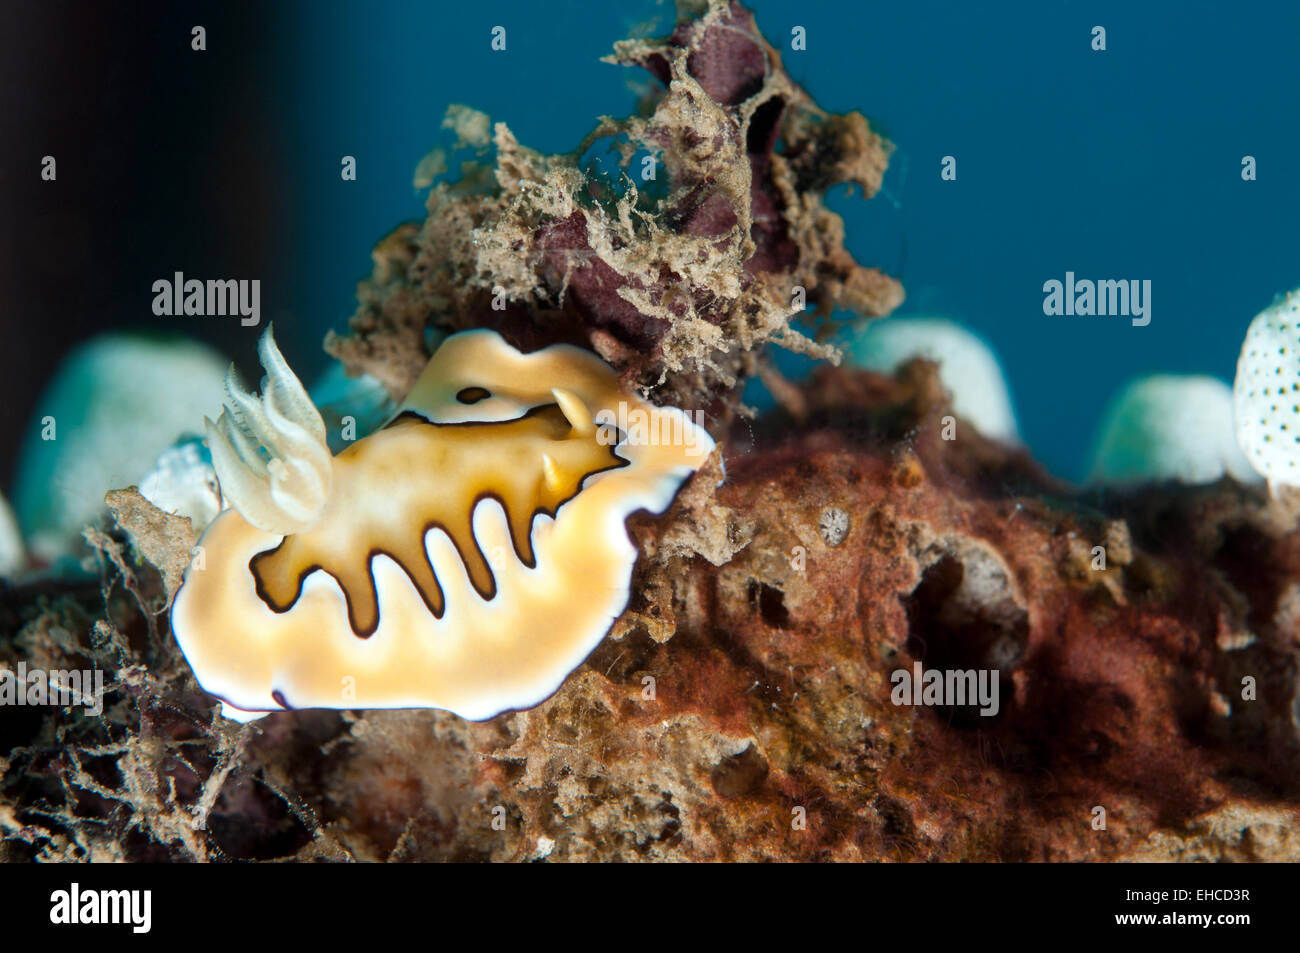 Nudibranch (Chromodoris coi) crawling over the reef. Stock Photo